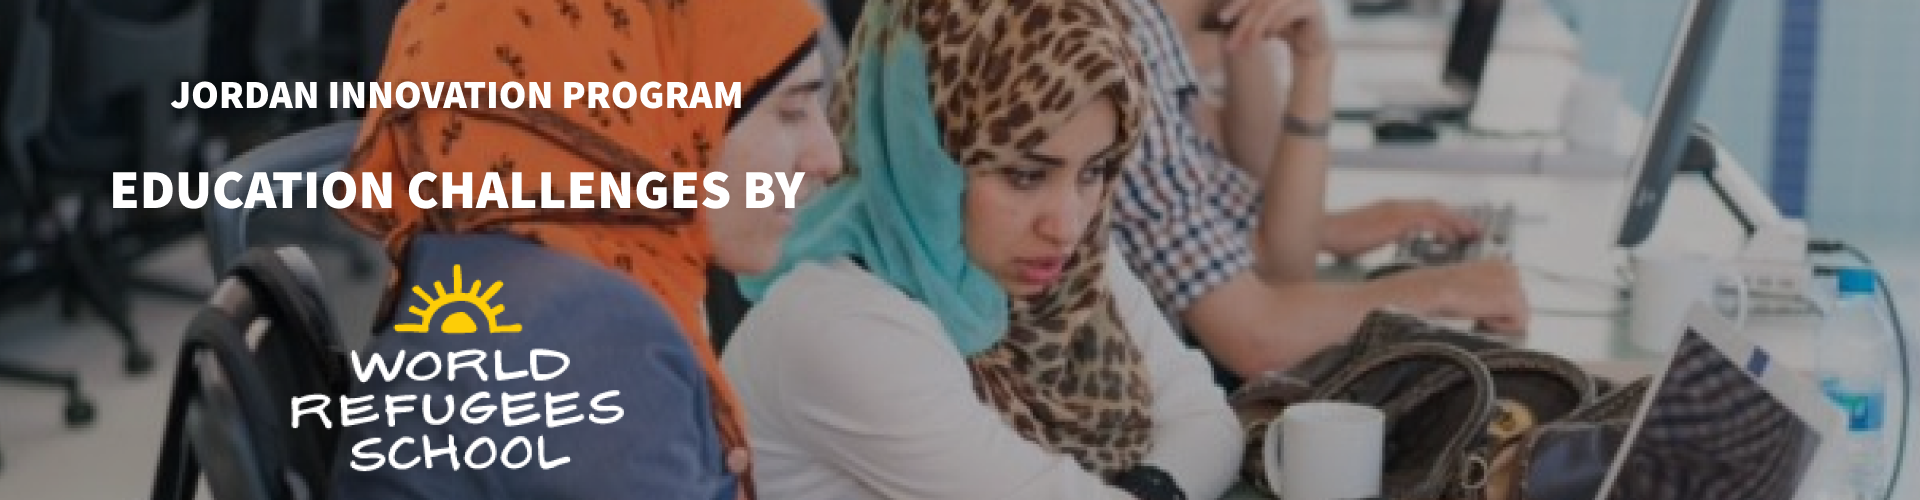 World Refugee School: Education Challenges - Jordan Innovation Program